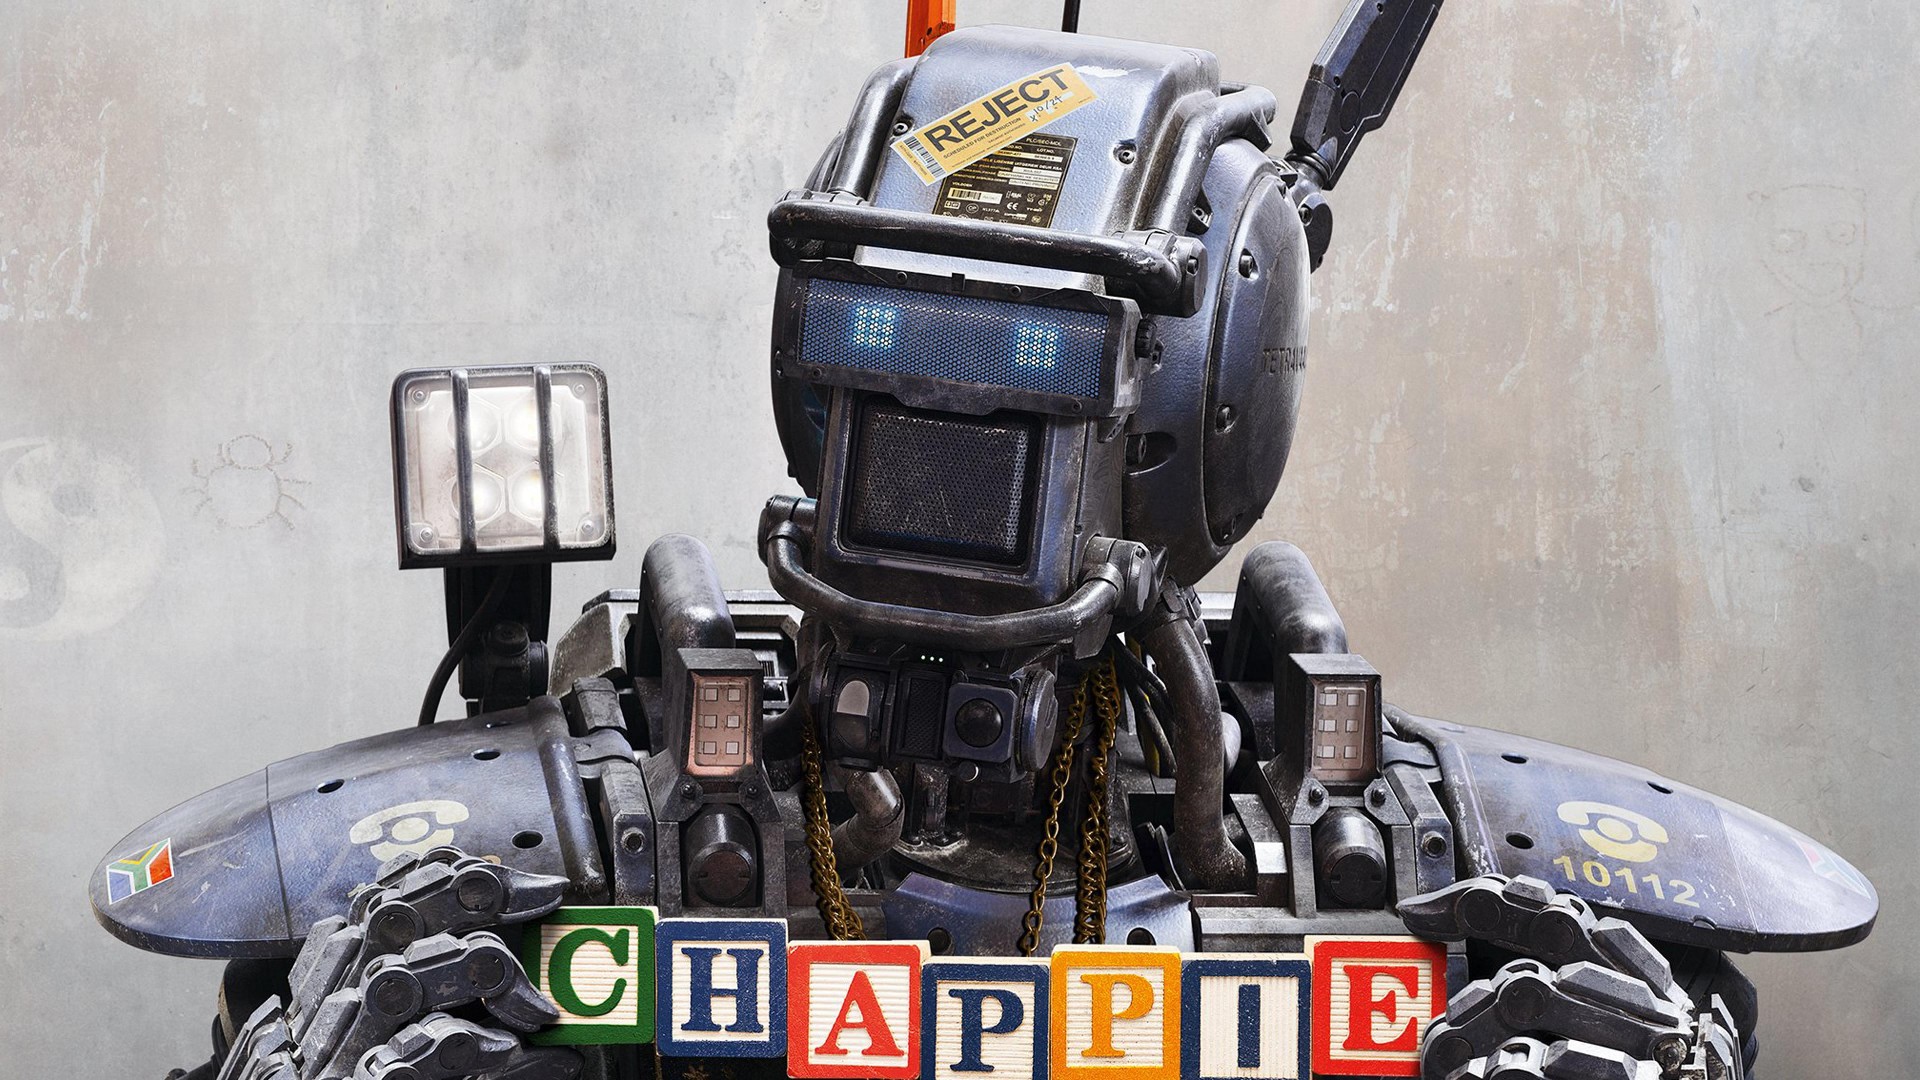 Робот по имени Чаппи, кино, фильм, робот, Chappie, Best Movies of 2015, robot, police, wallpaper, gun (horizontal)